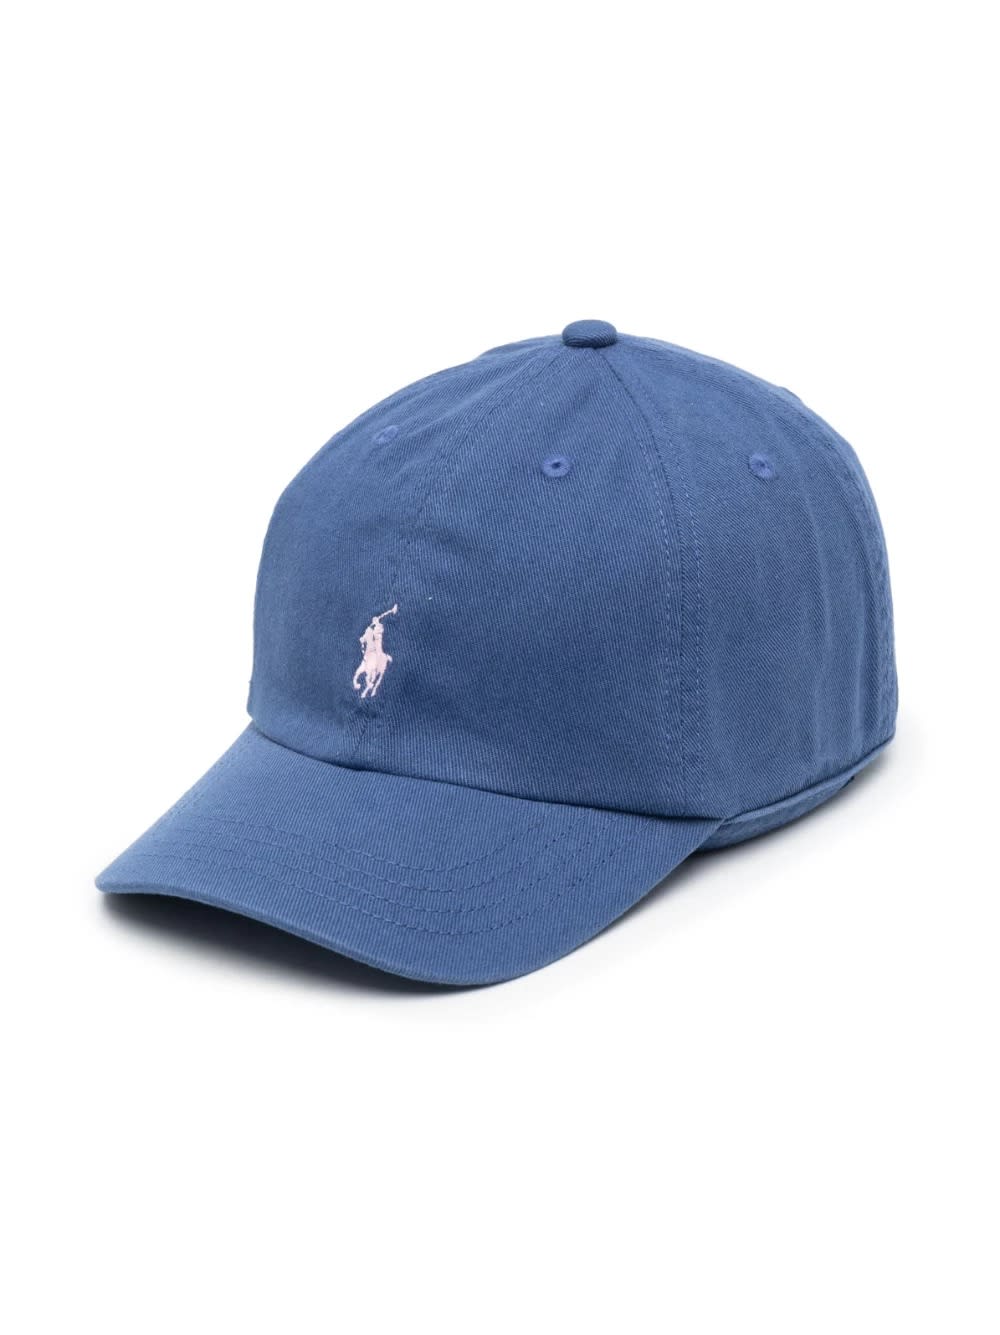 Ralph Lauren Blue Baseball Hat With Pink Pony